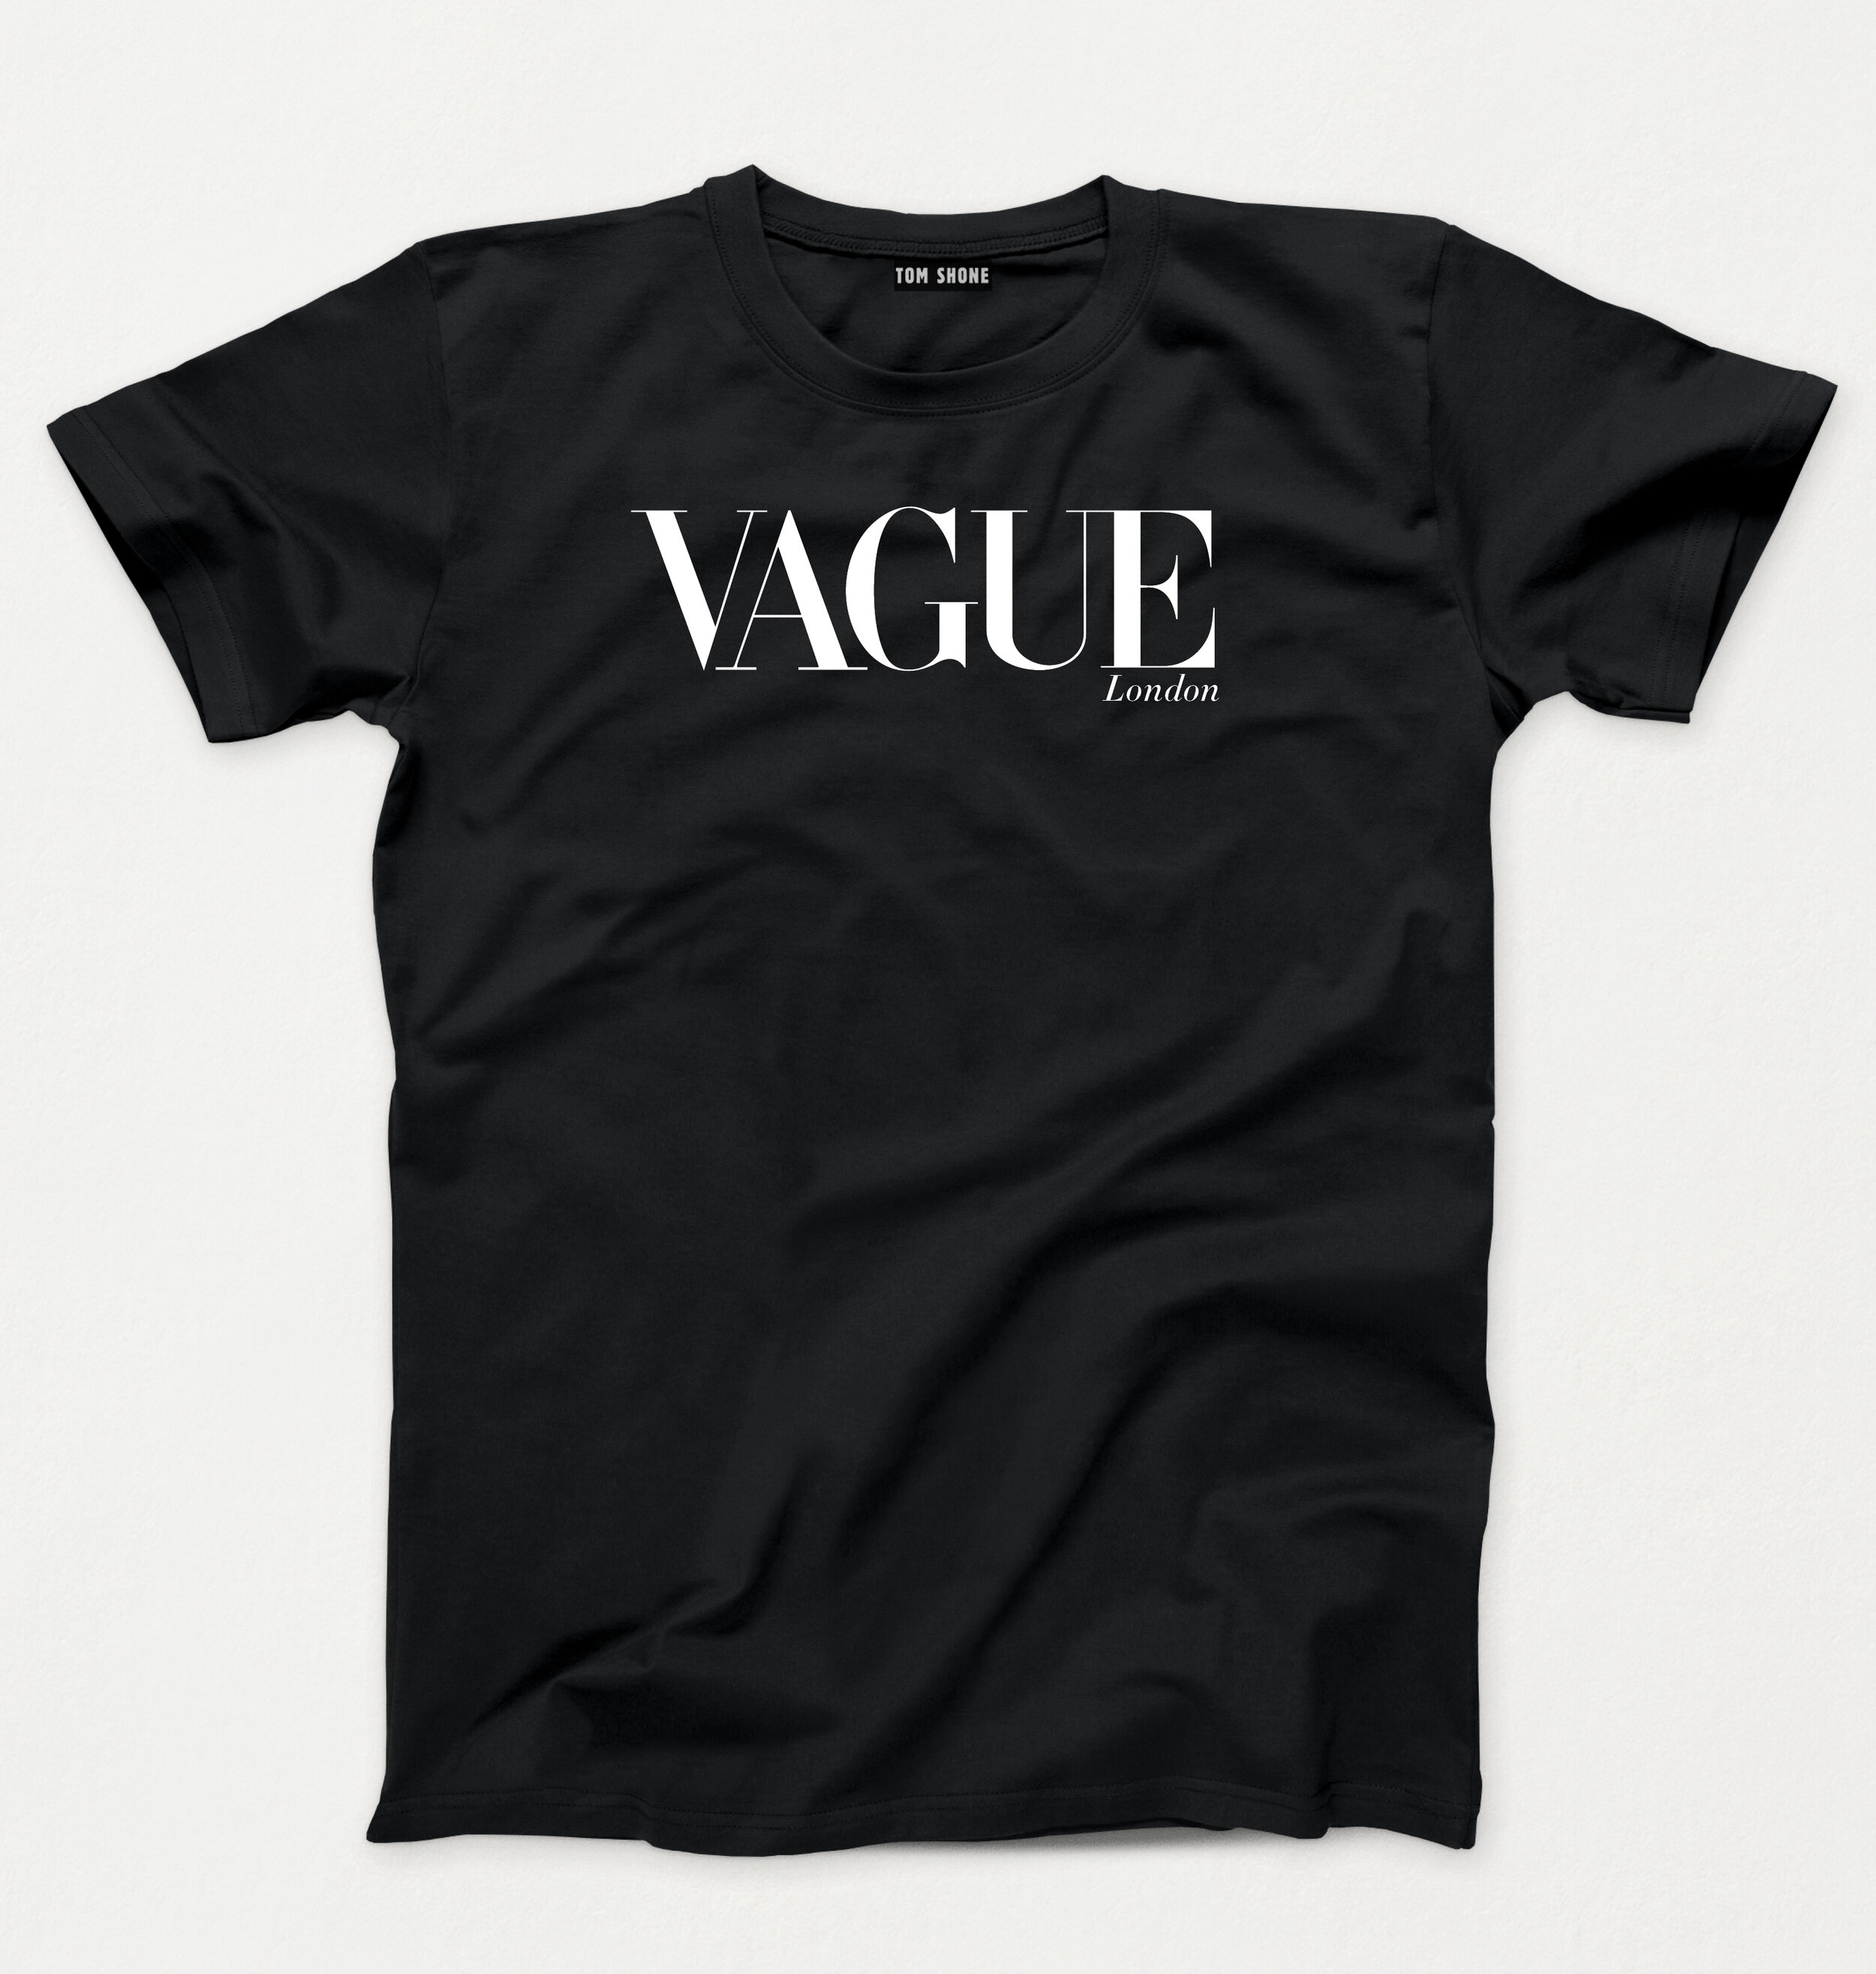 "Vague London" T-shirt